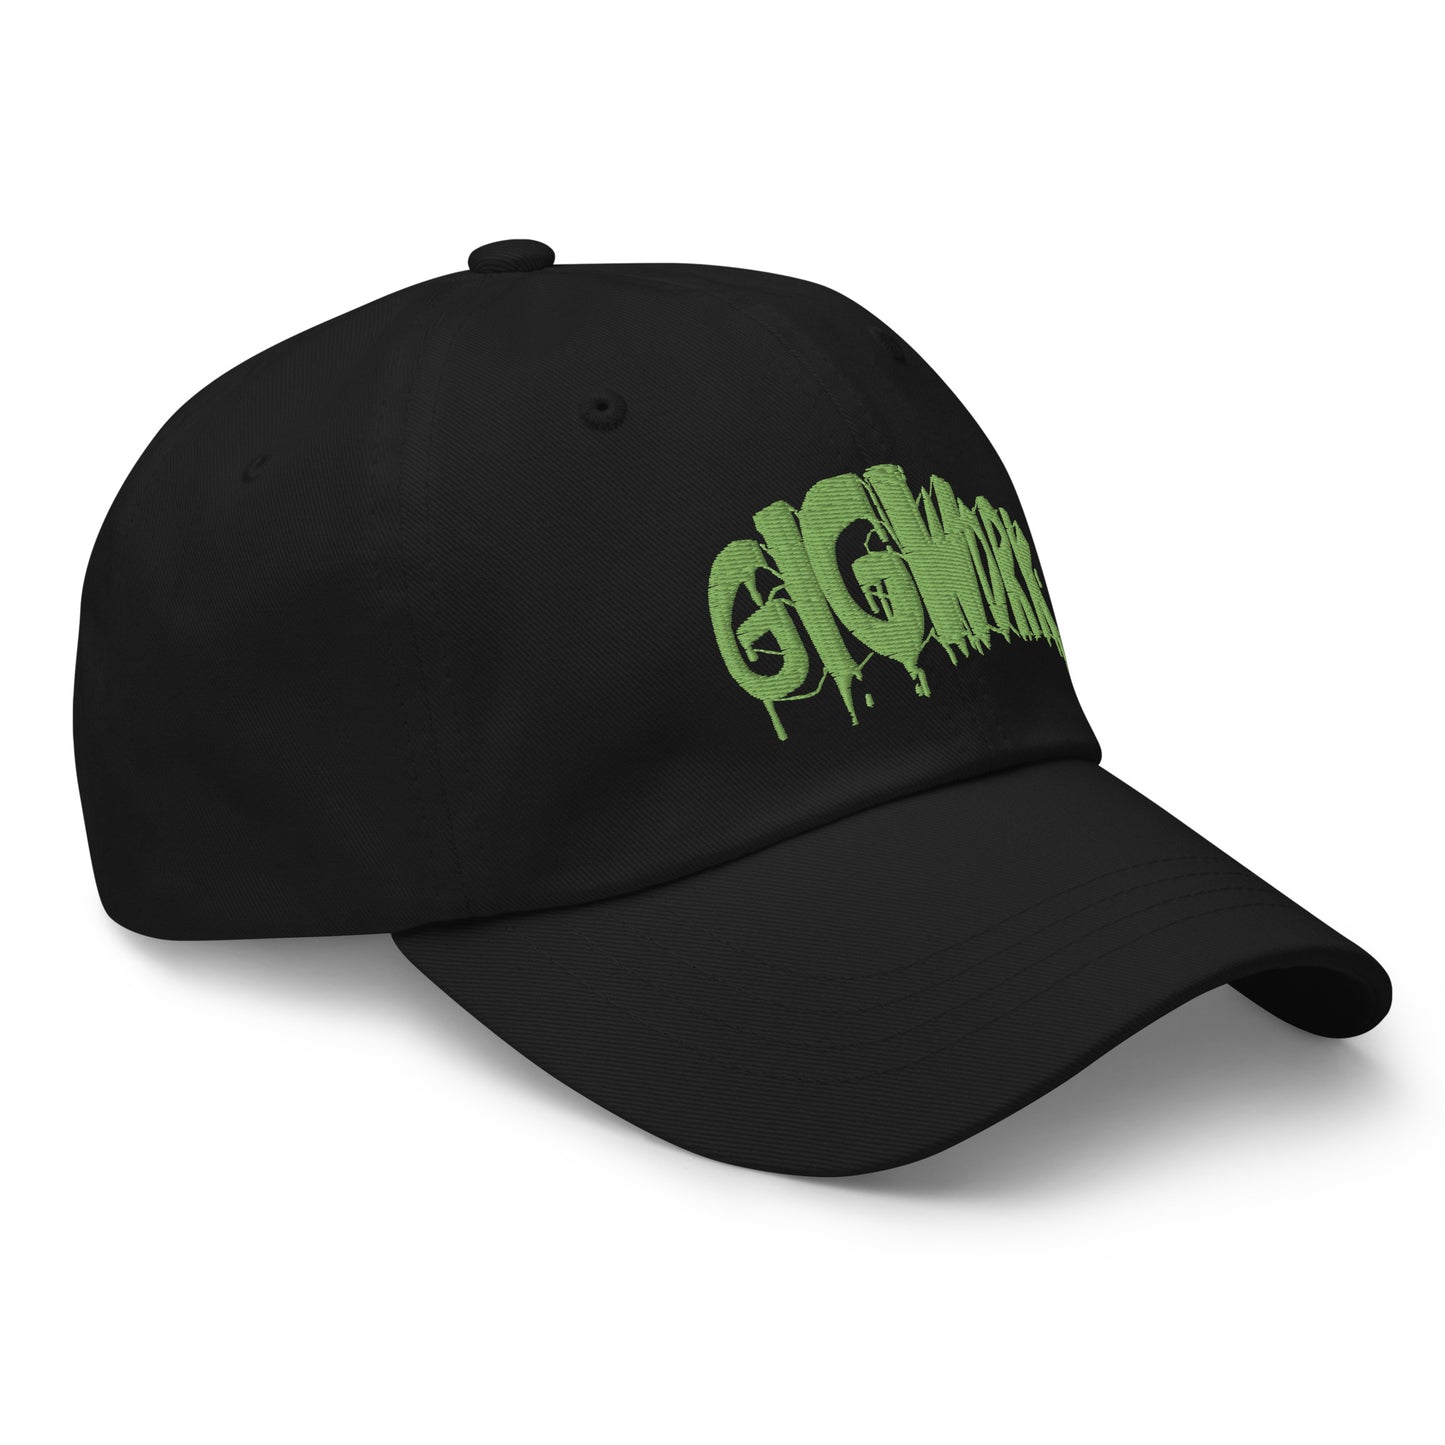 Gig Work dad hat